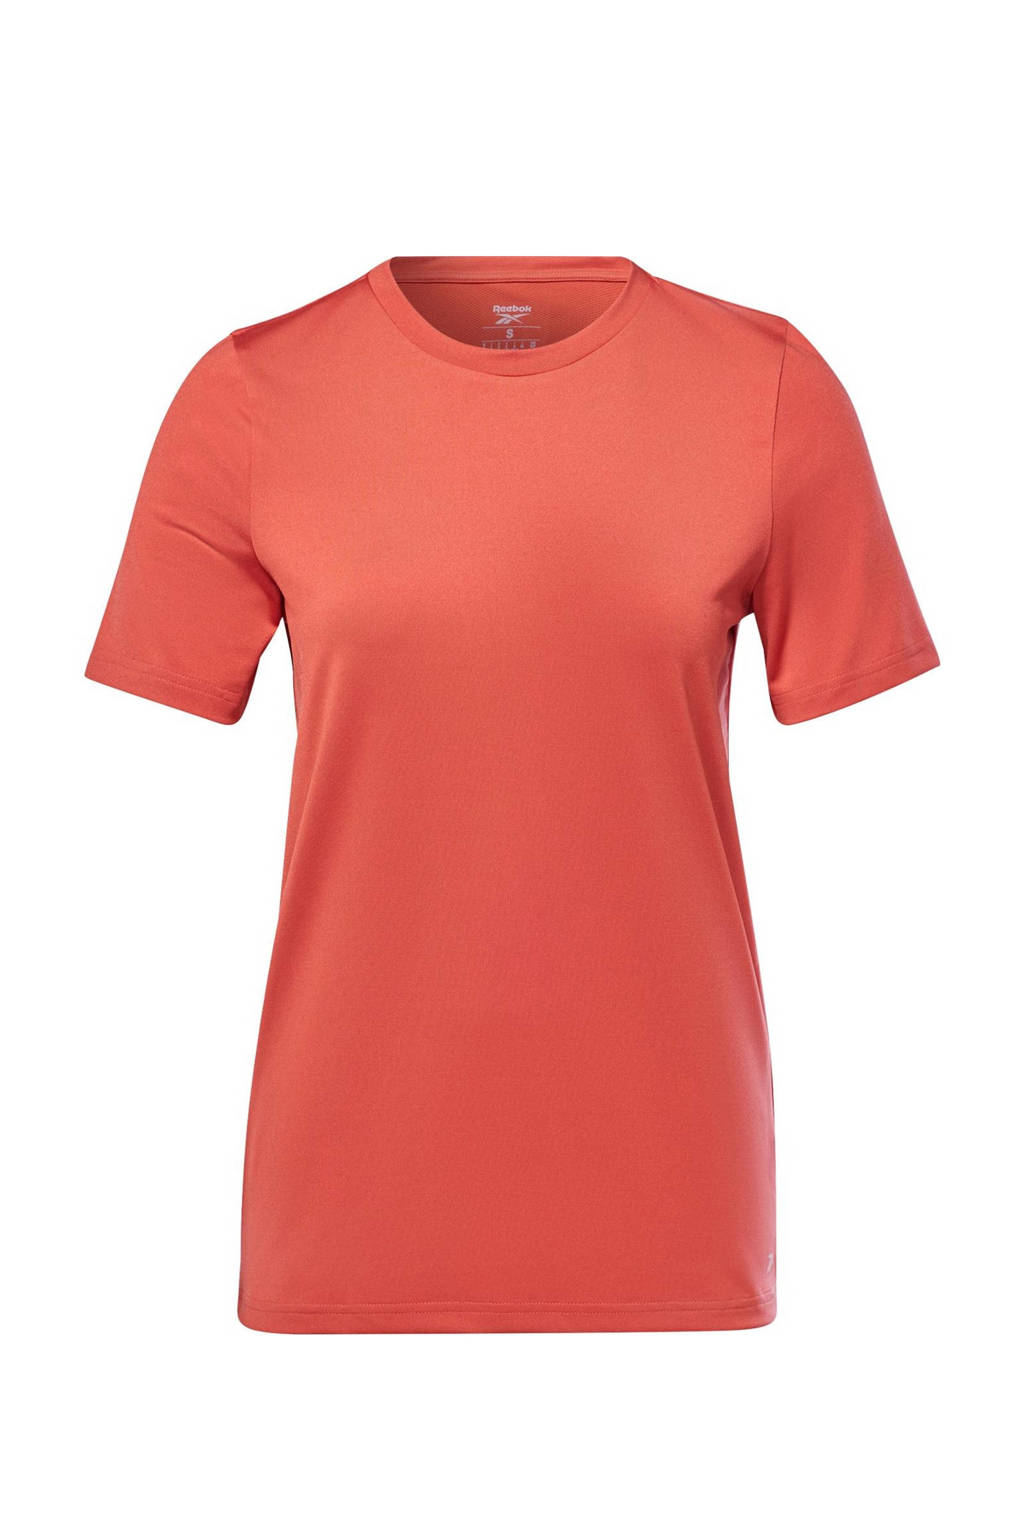 Rode dames Reebok Training sport T-shirt van gerecycled polyester met korte mouwen en ronde hals